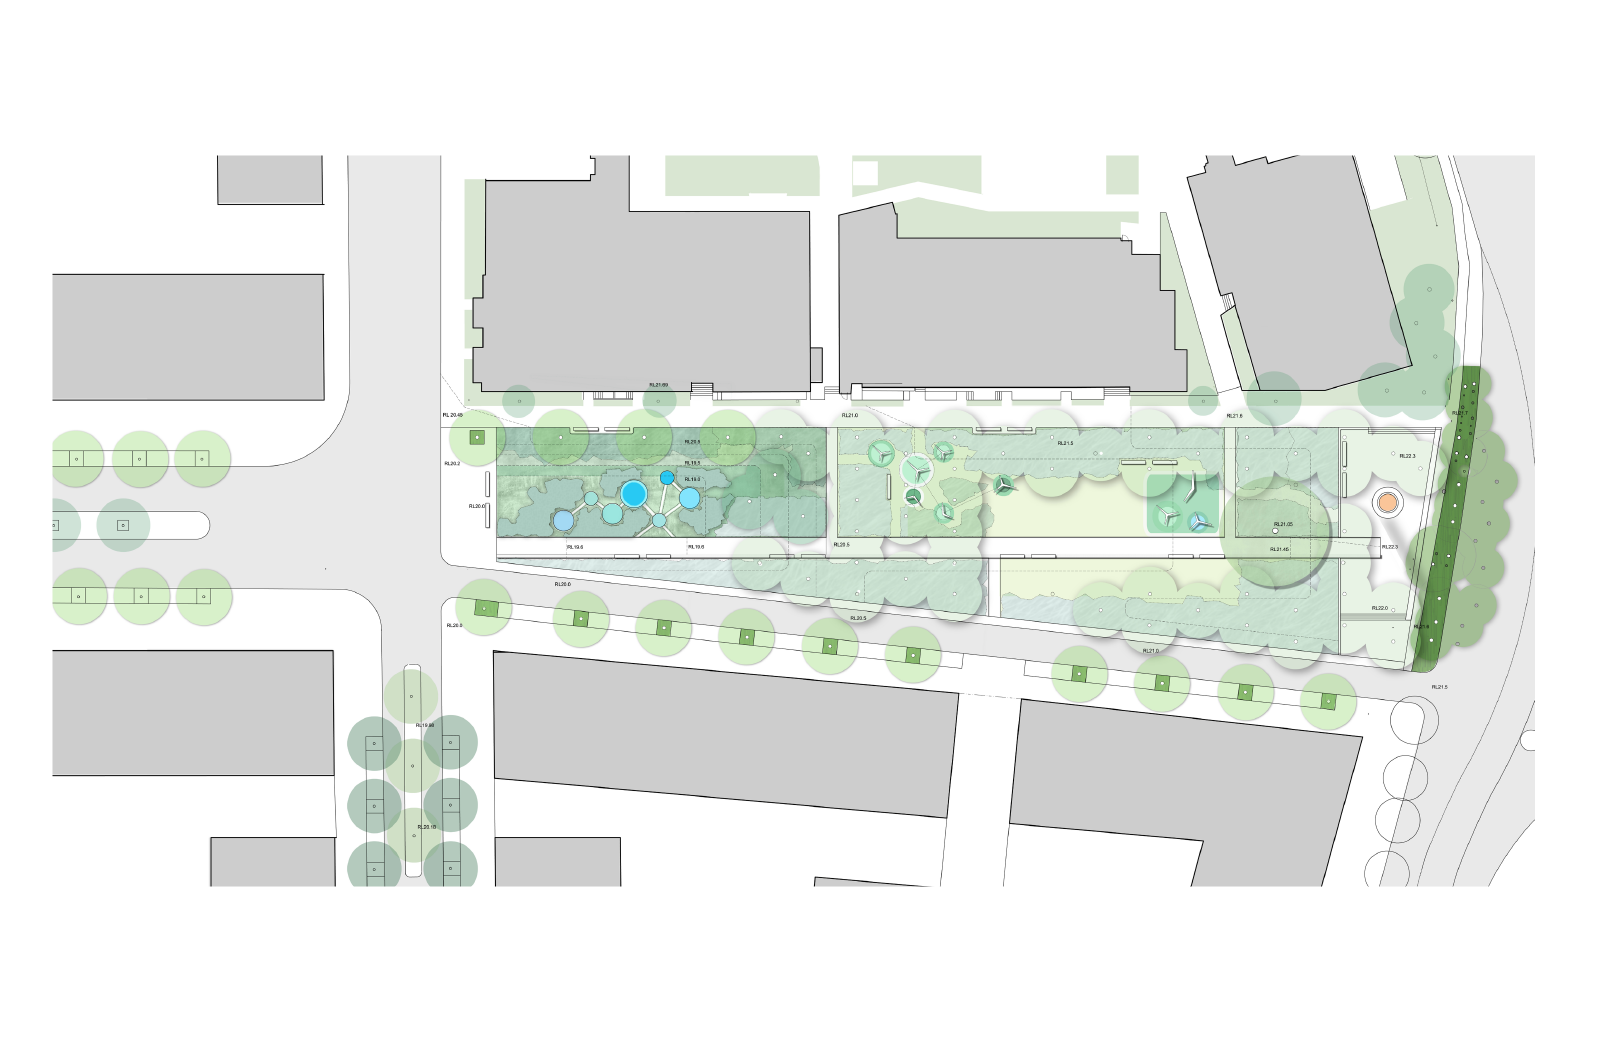 Rain Lantern urban design concept developed by McGregor Westlake Architecture and Gallagher Studios